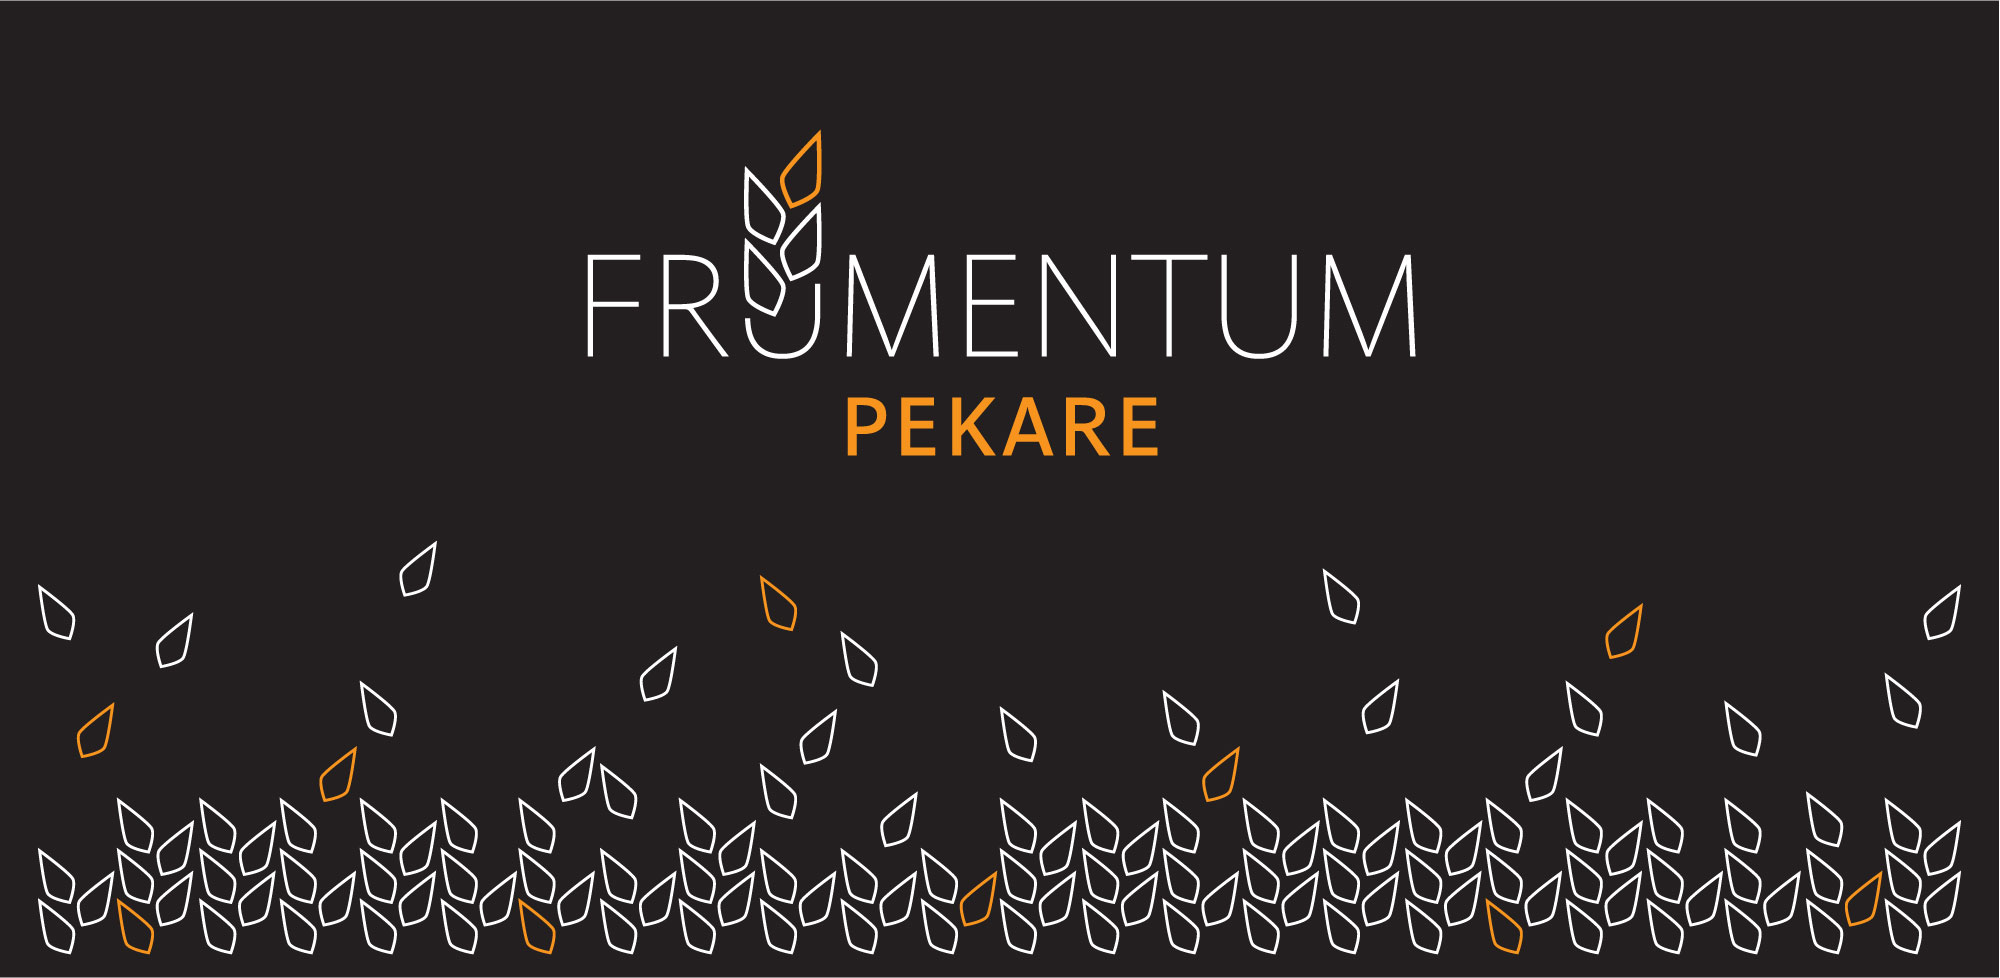 masavukmanovic.com - frumentum bakeries - branding 01